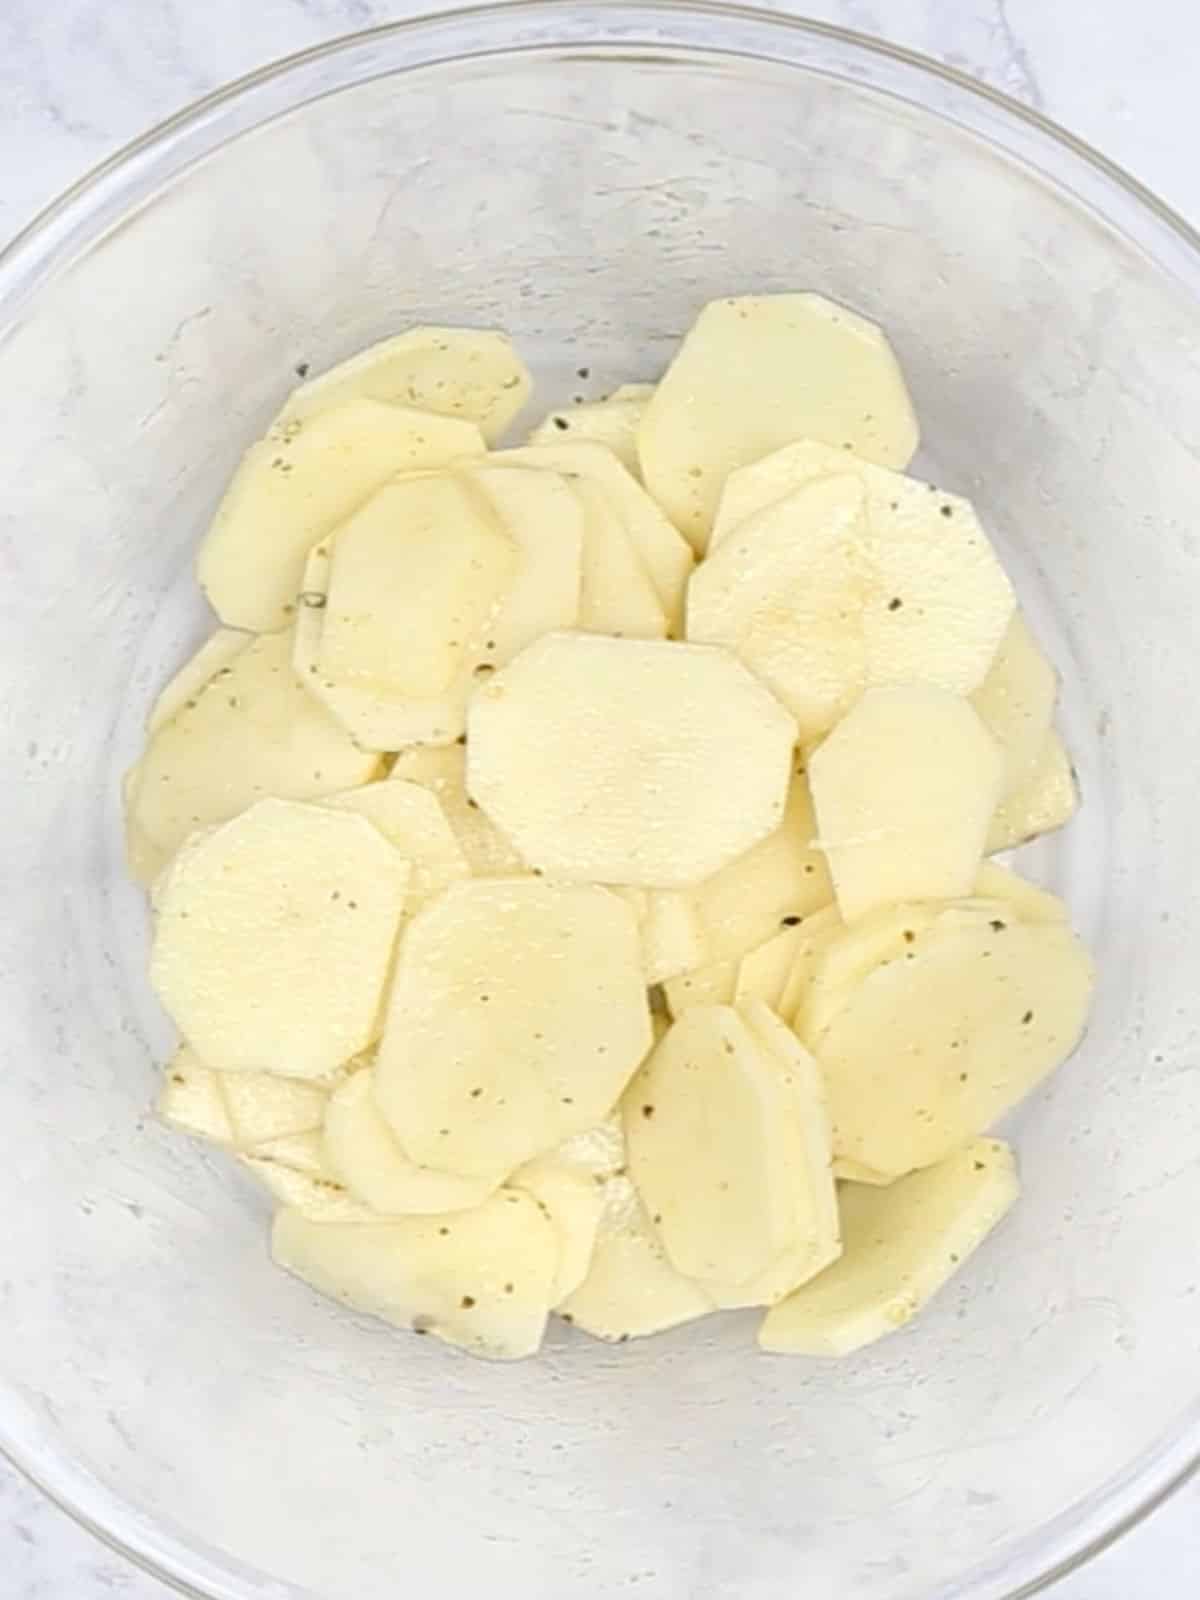 Seasoned sliced  potatoes in a glass bowl.